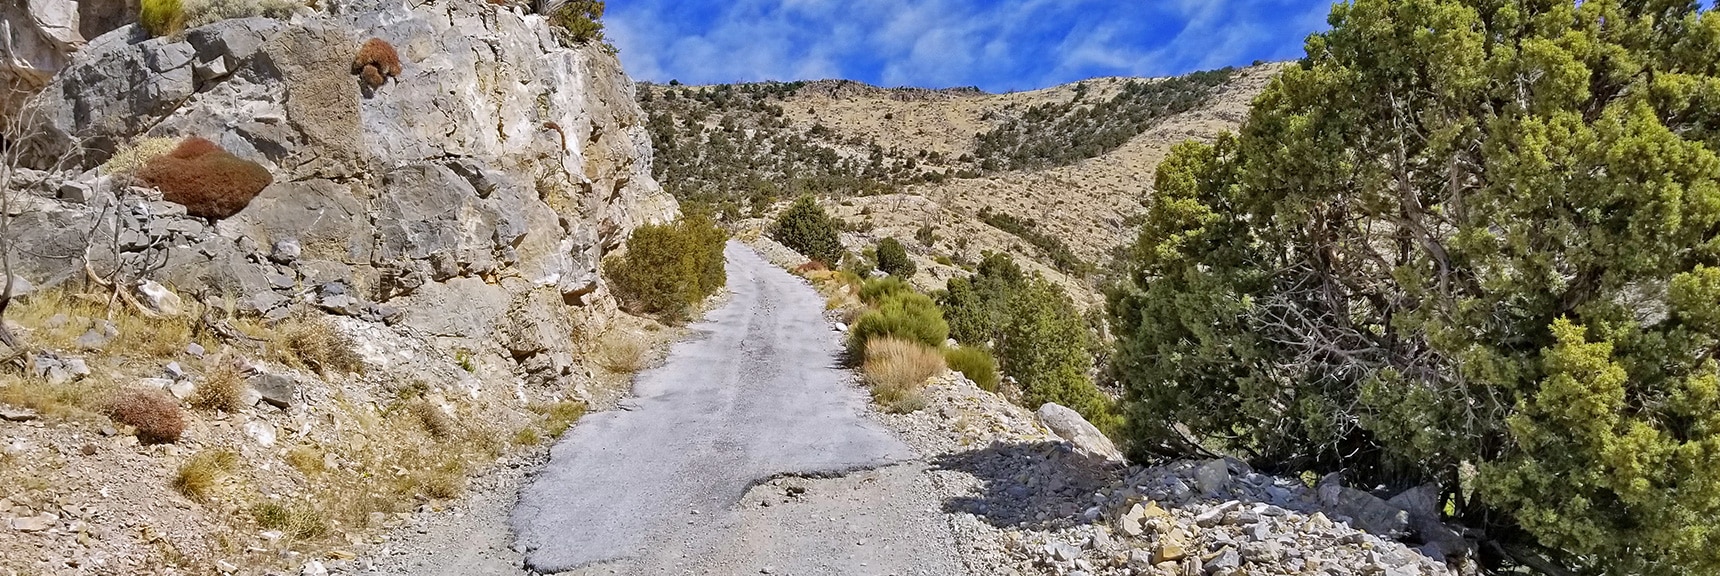 Relentless Rapid Elevation Ascent. No Respite Until the Upper Ridge is Achieved | Potosi Mountain Spring Mountains Nevada